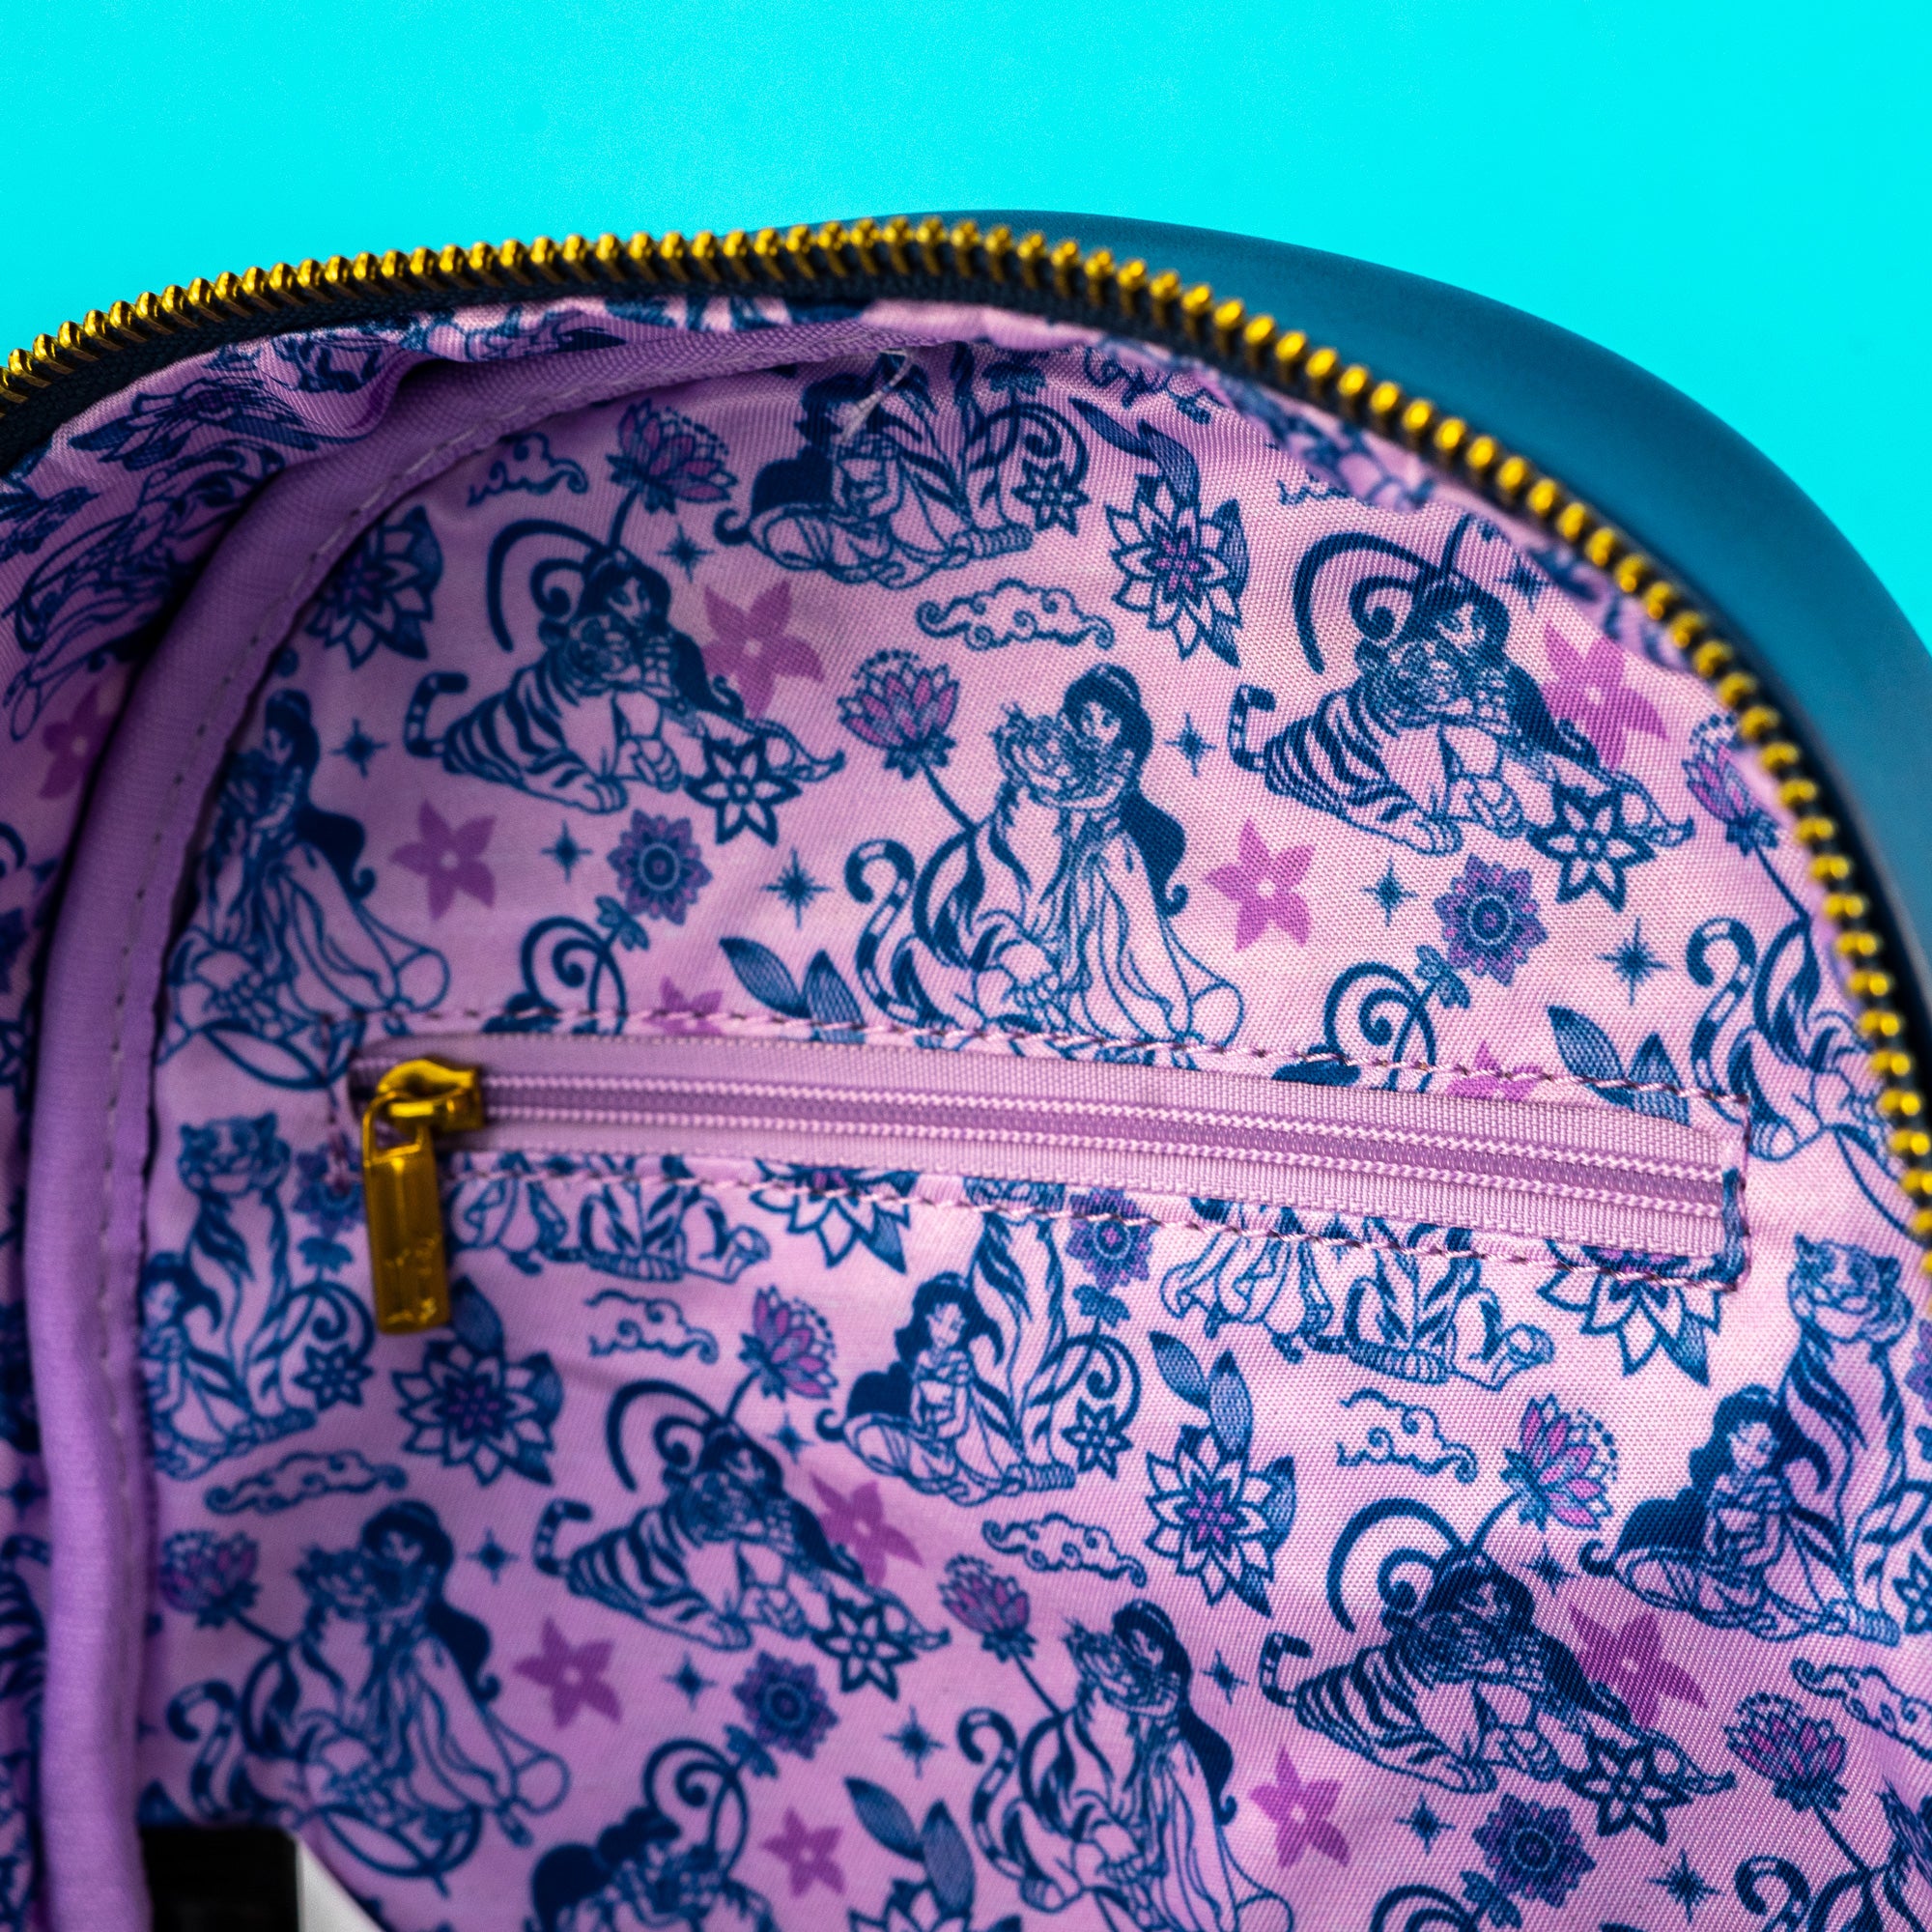 Loungefly x Disney Aladdin Princess Jasmine and Rajah Floral Print Mini Backpack